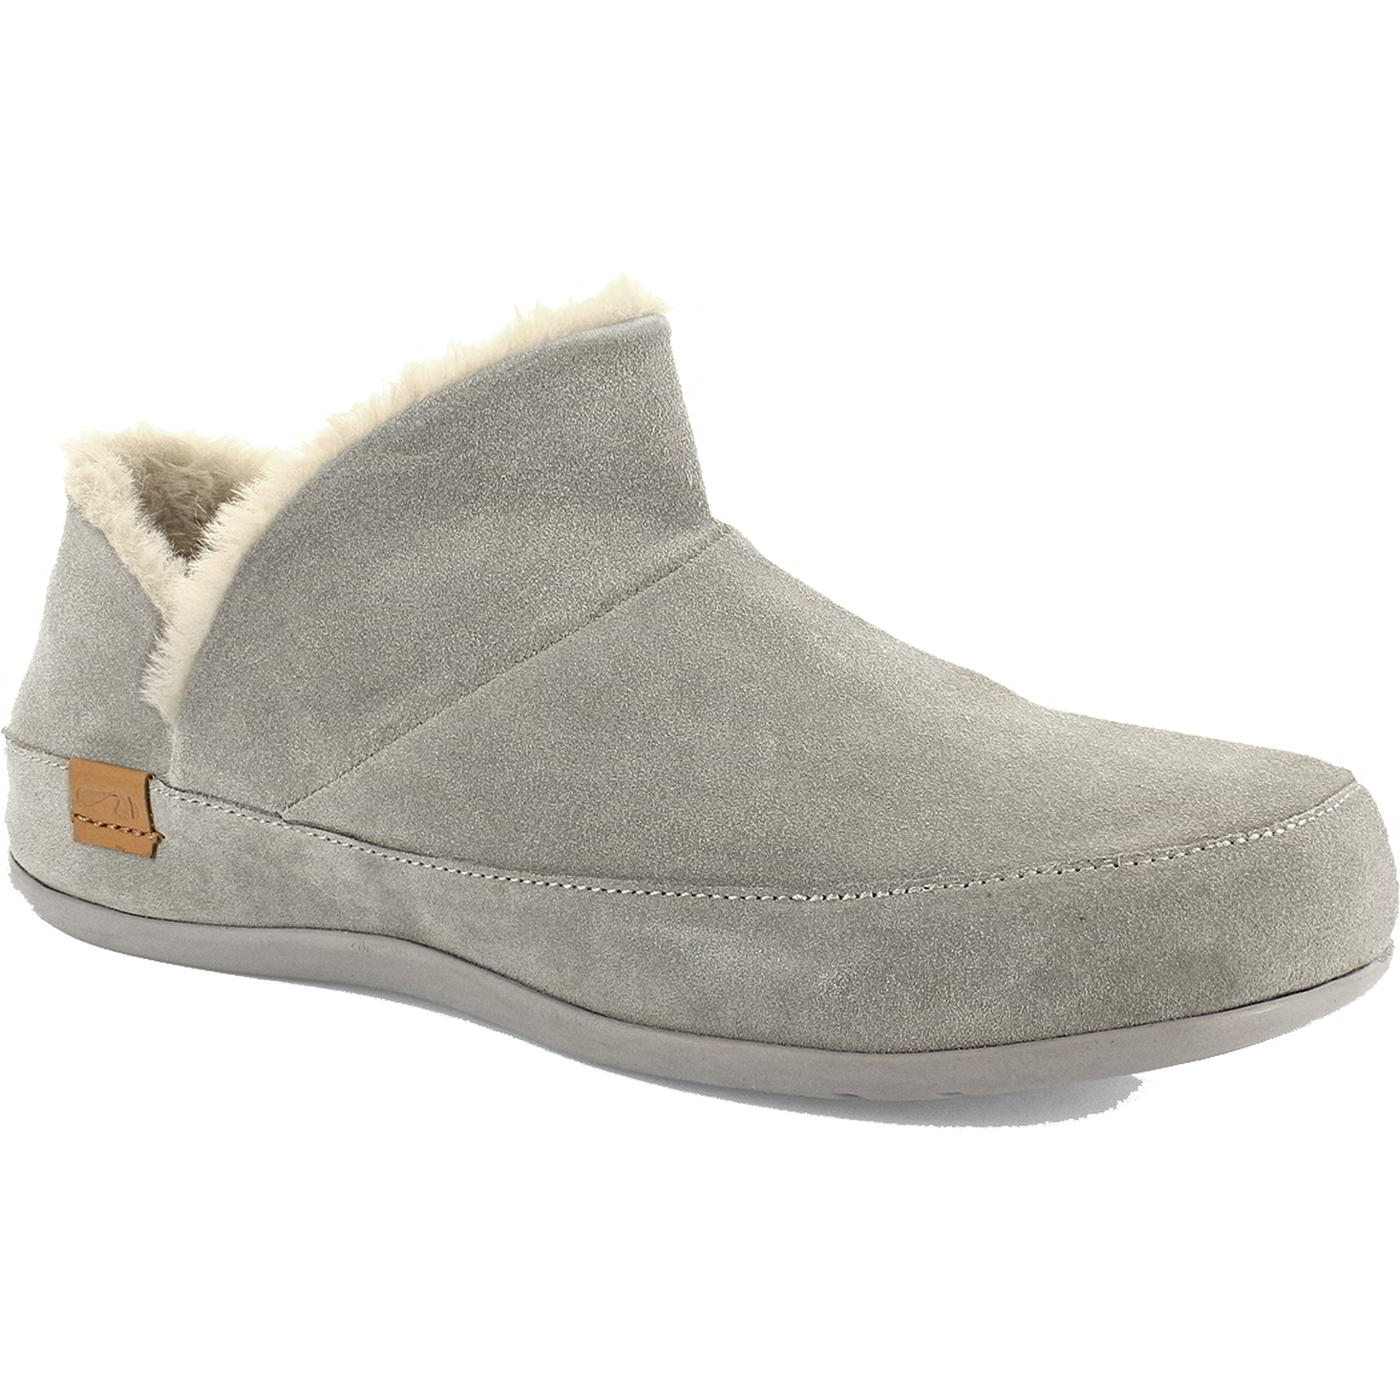 Strive Womens Geneva Orthotic Pull On Slipper Boots - Charcoal Grey - UK 7